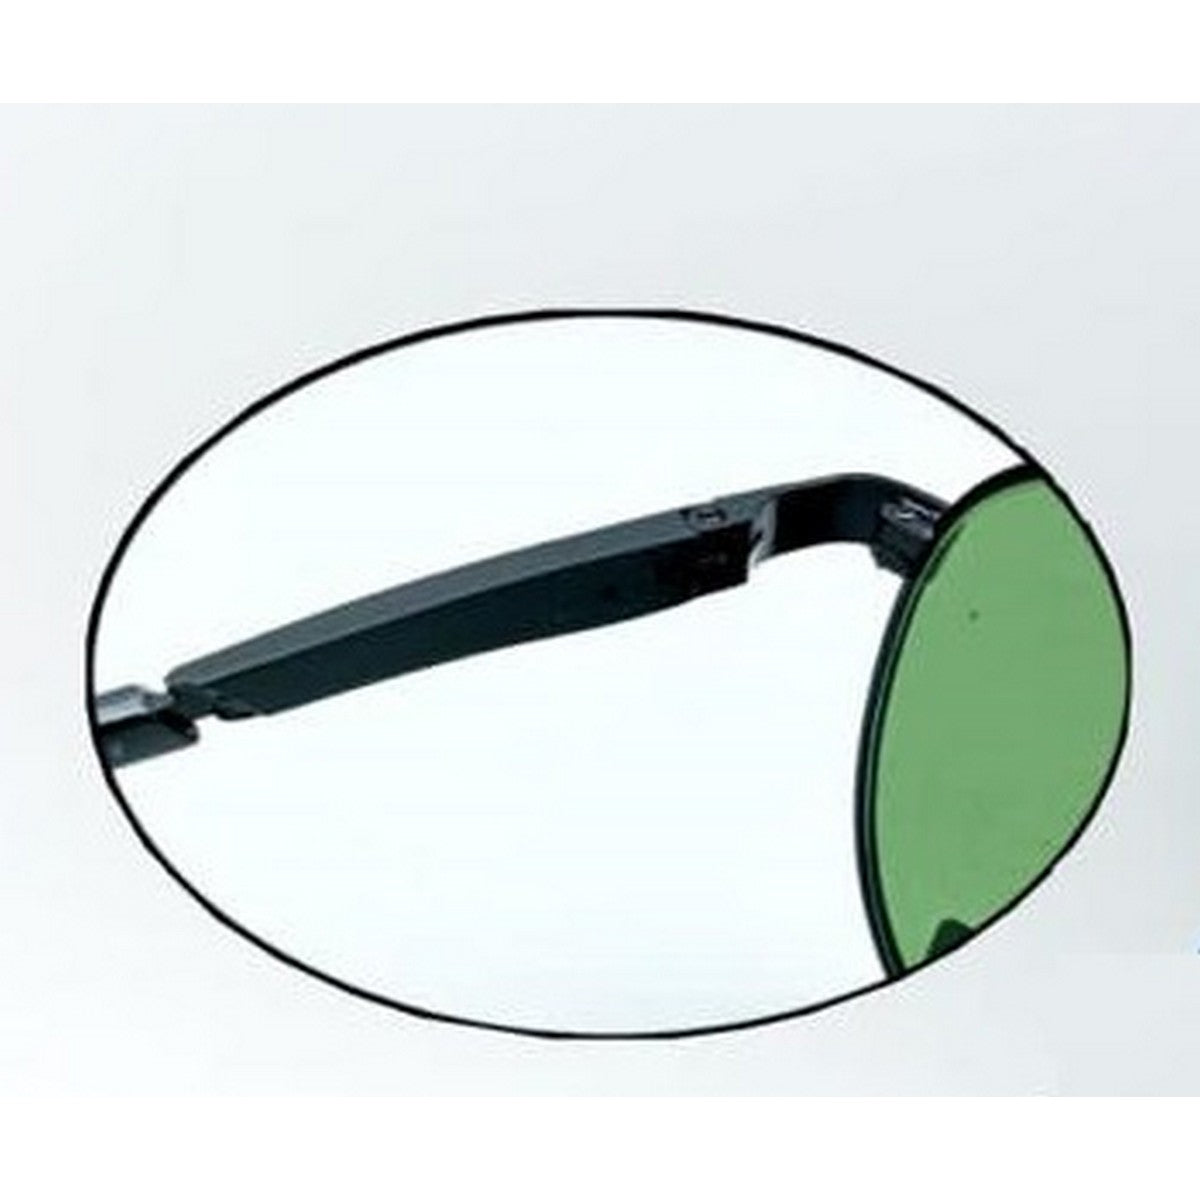 Stylish Black Sunglasses with Green Glass Lenses